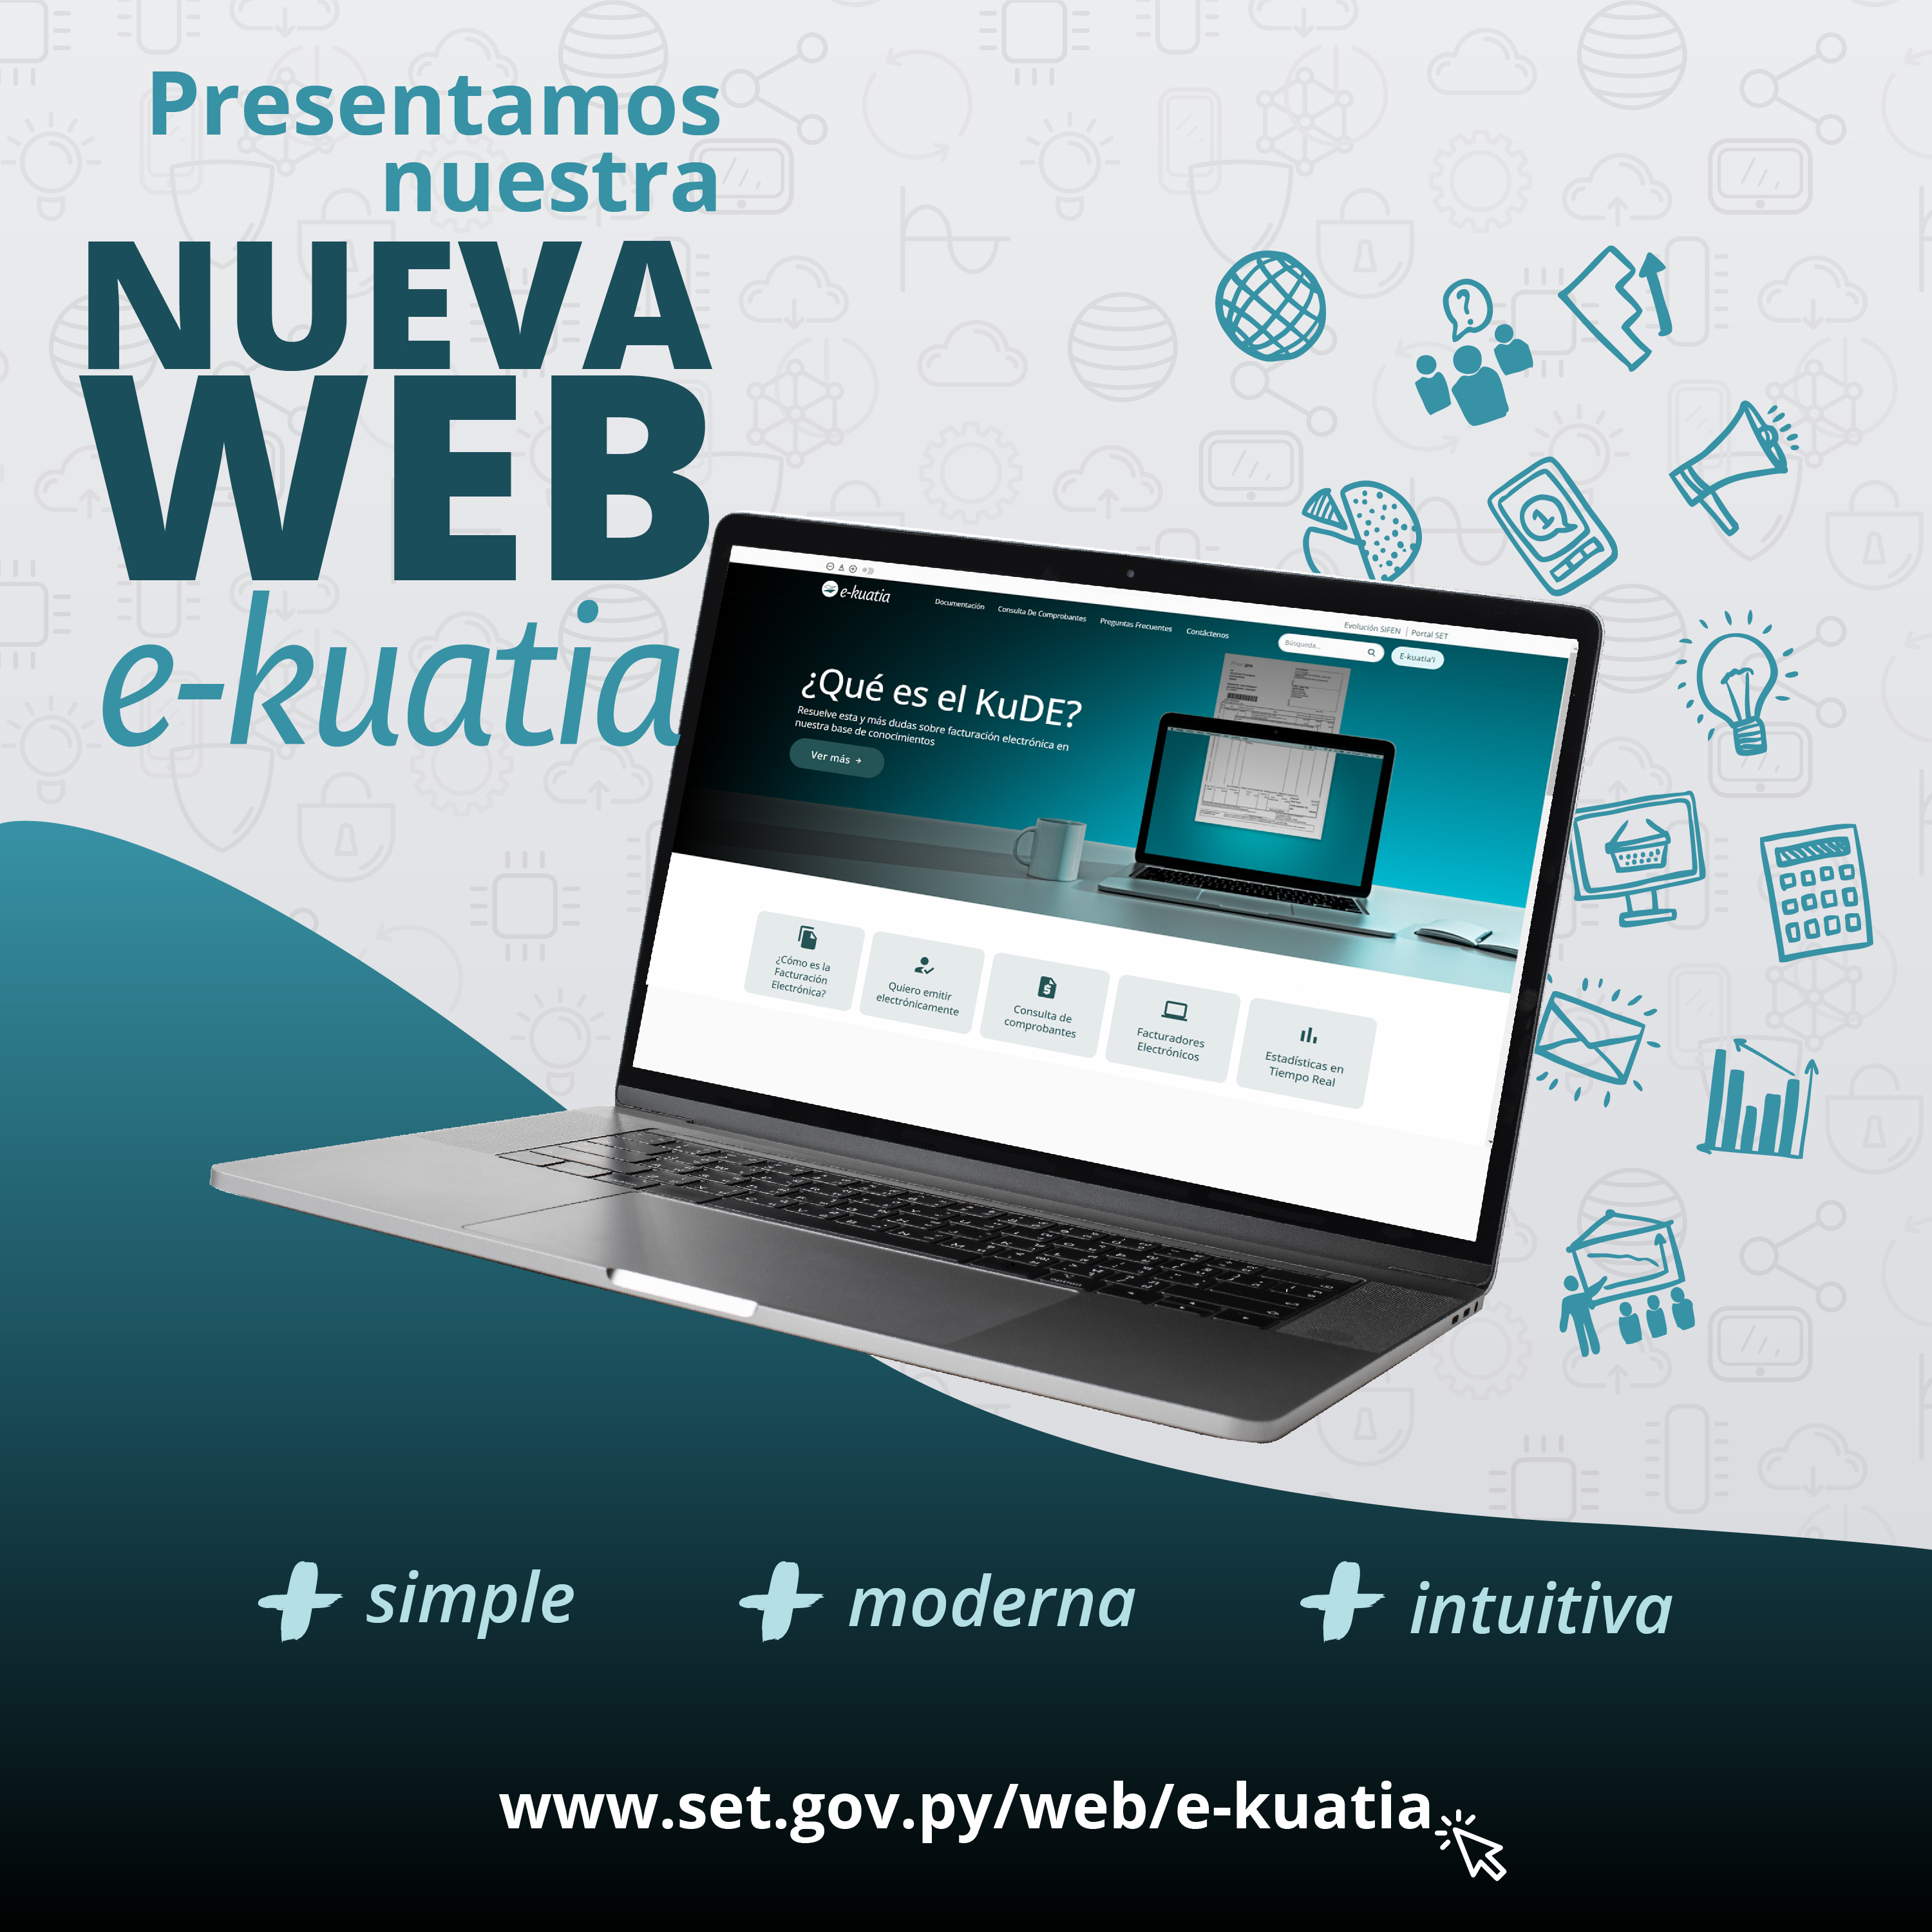 ekuatia Web nueva